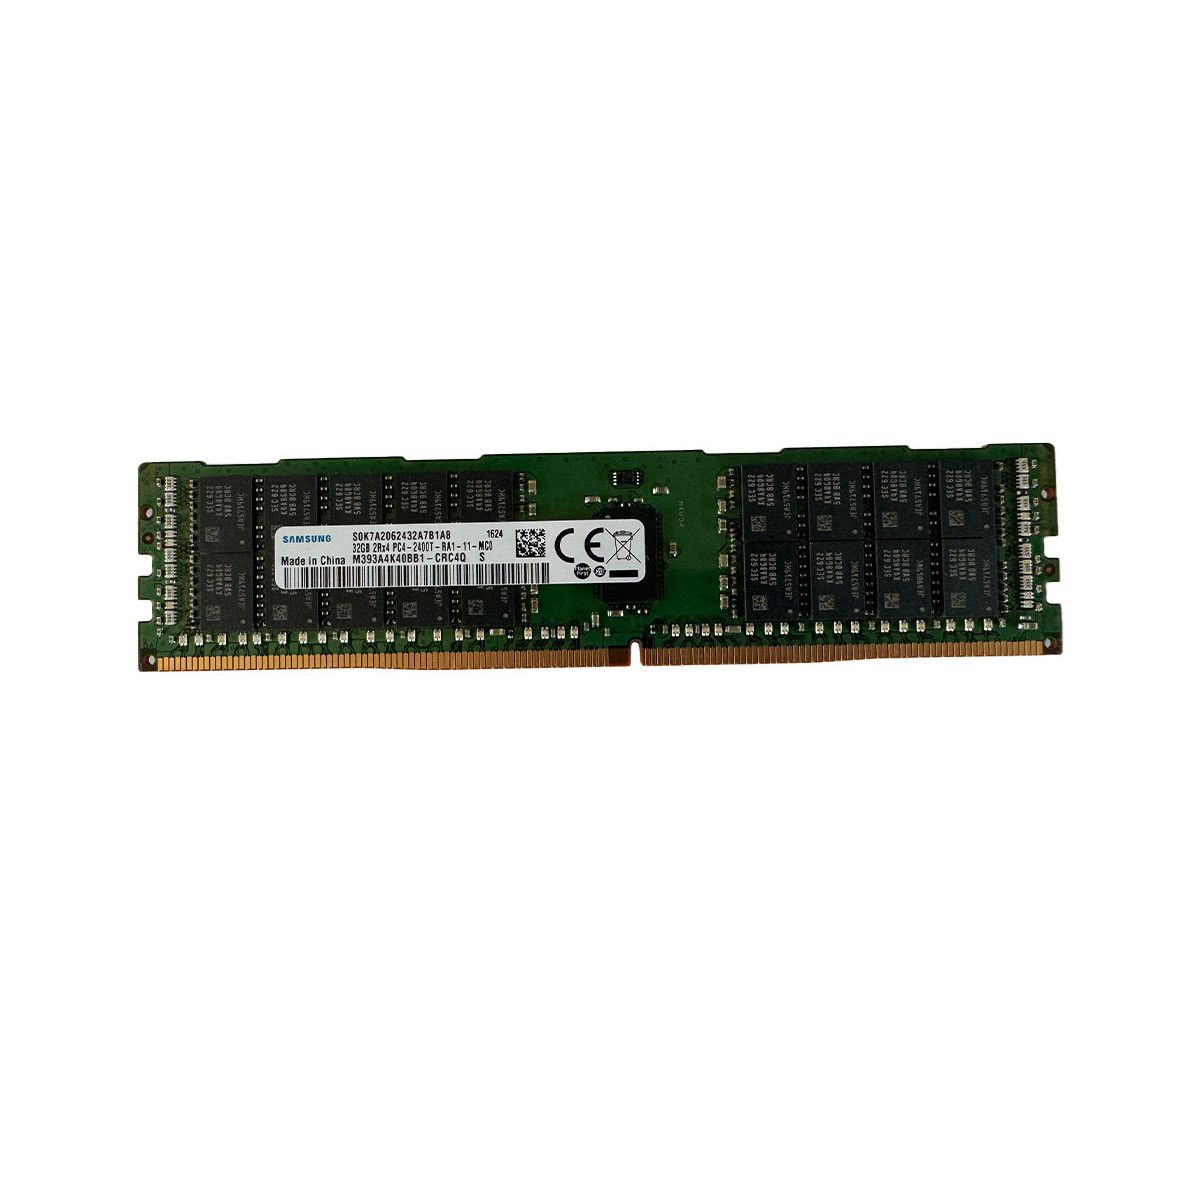 A8868768-MS - Memstar 1x 32GB DDR4-2400 RDIMM PC4-19200T-R - Mem-Star Compatibile OEM Memoria 1 - Memstar 